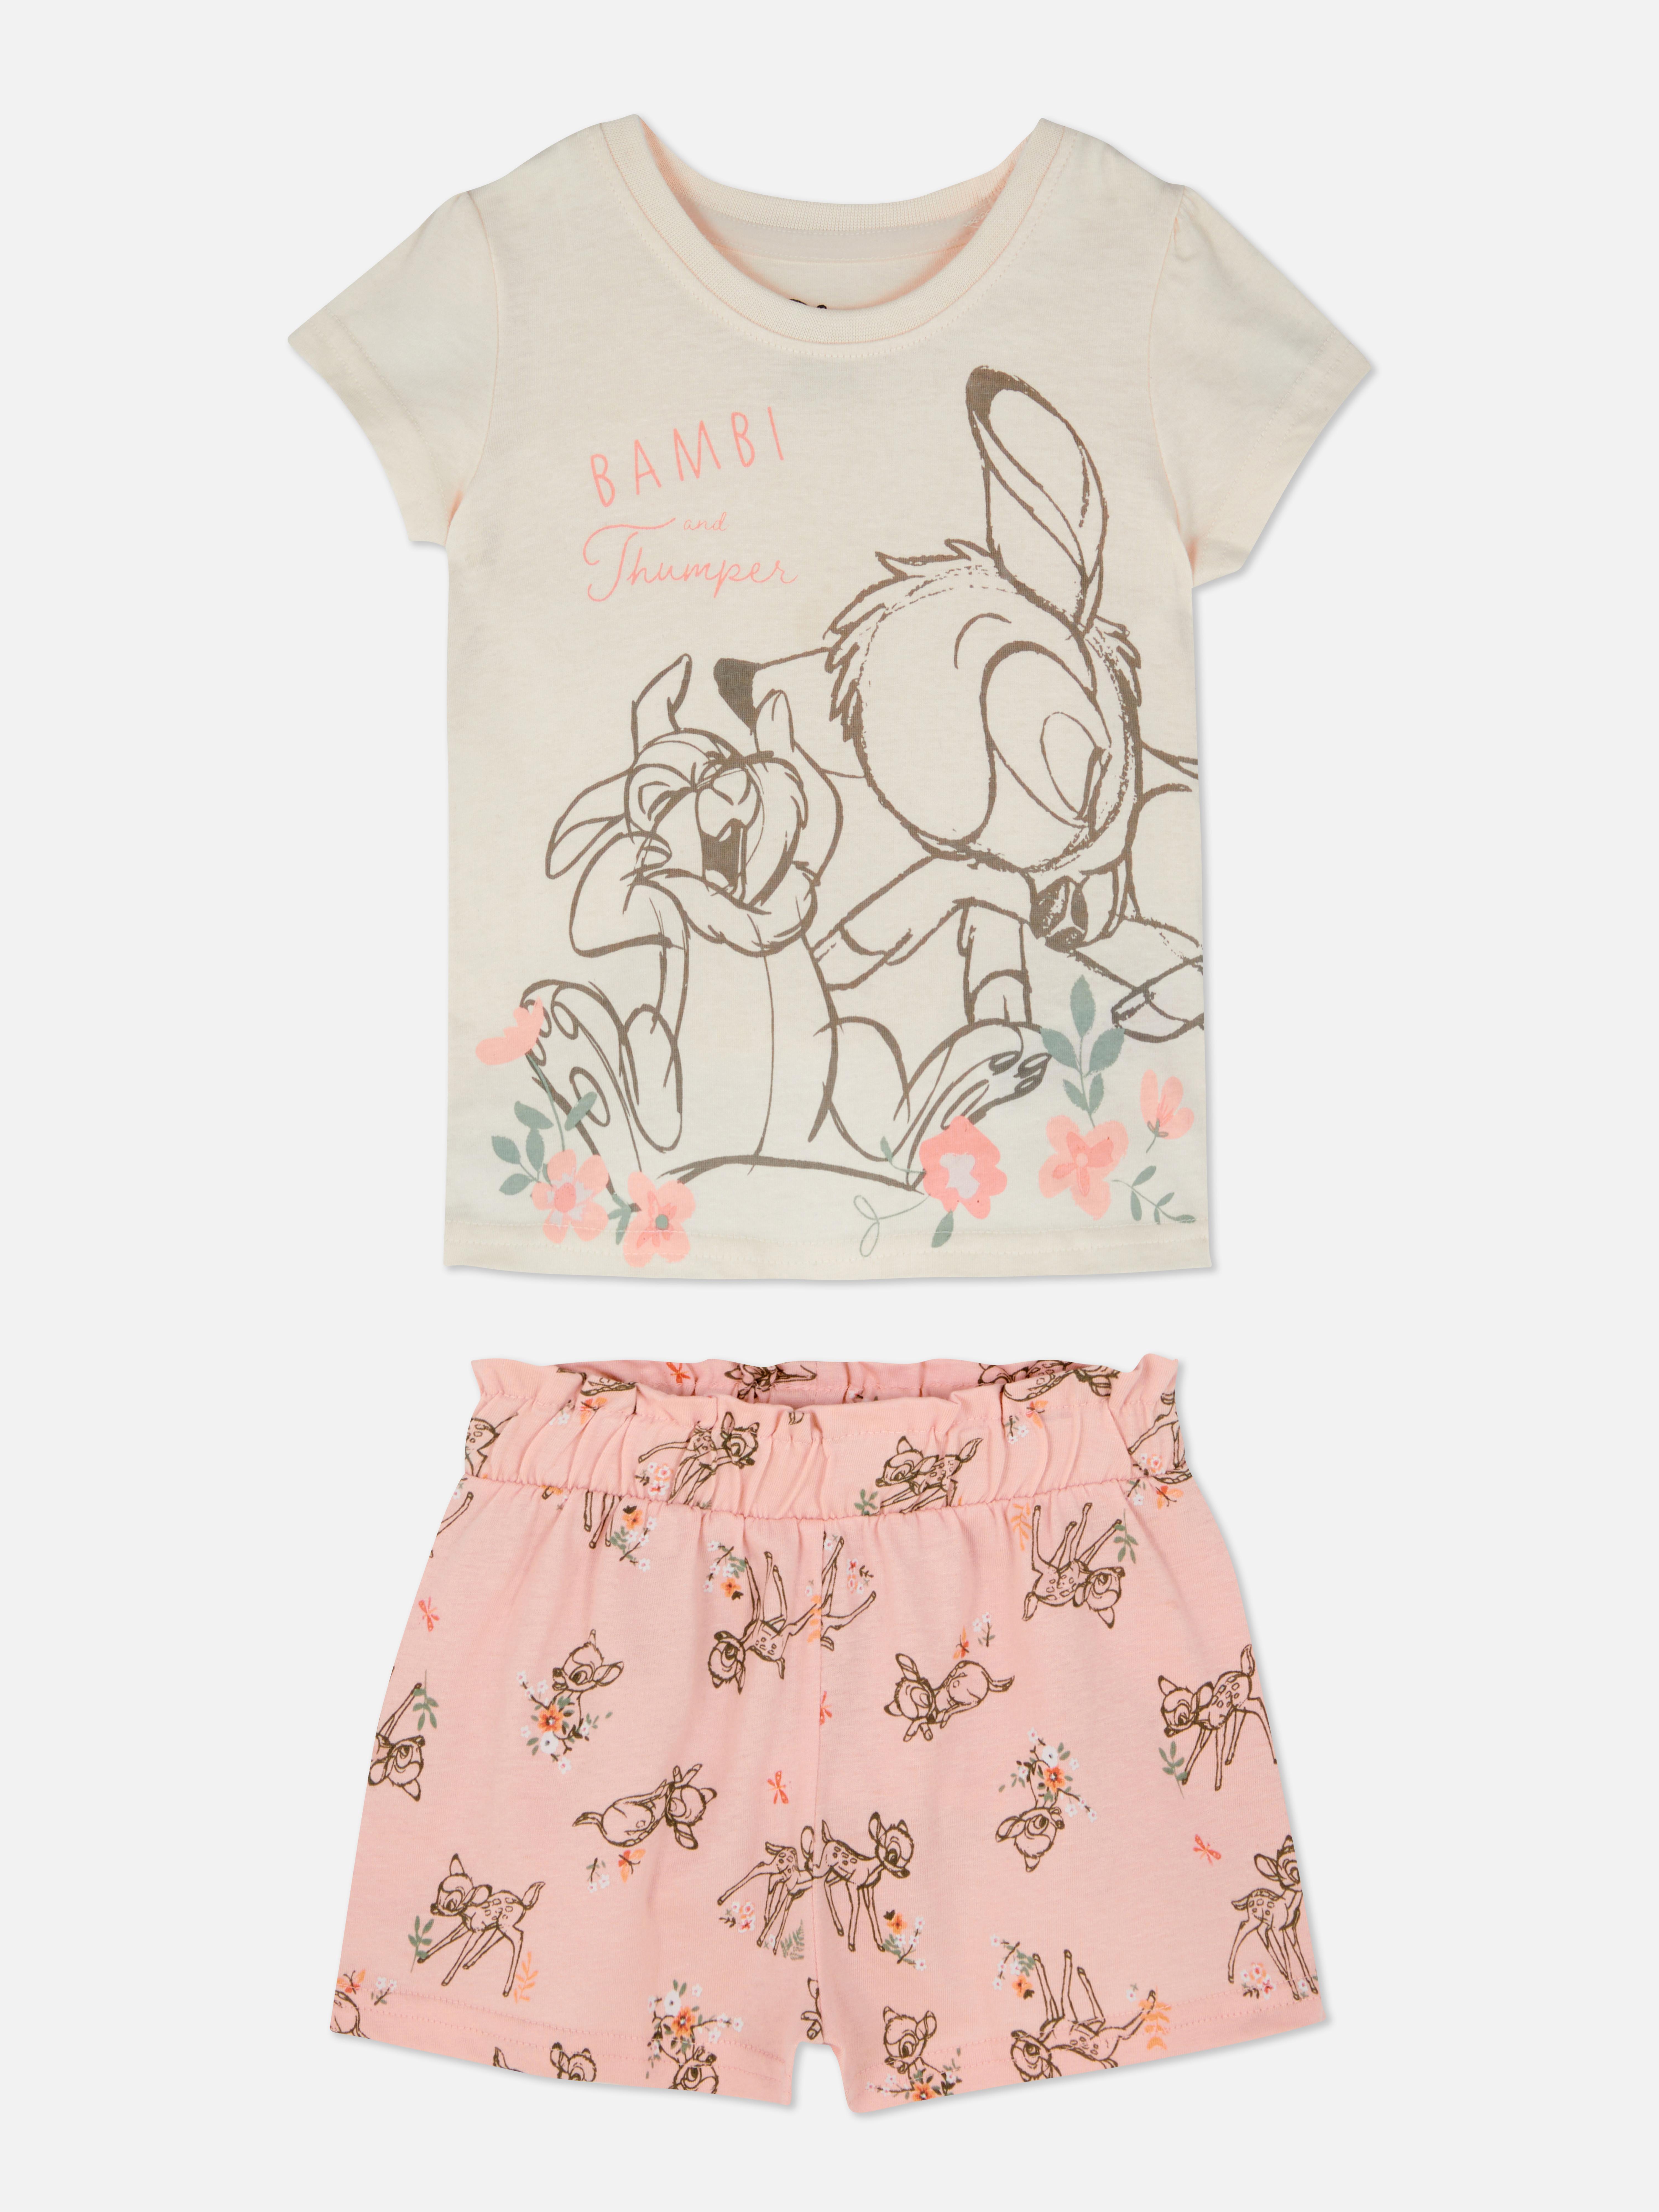 Disney’s Bambi and Thumper T-shirt and Shorts Set